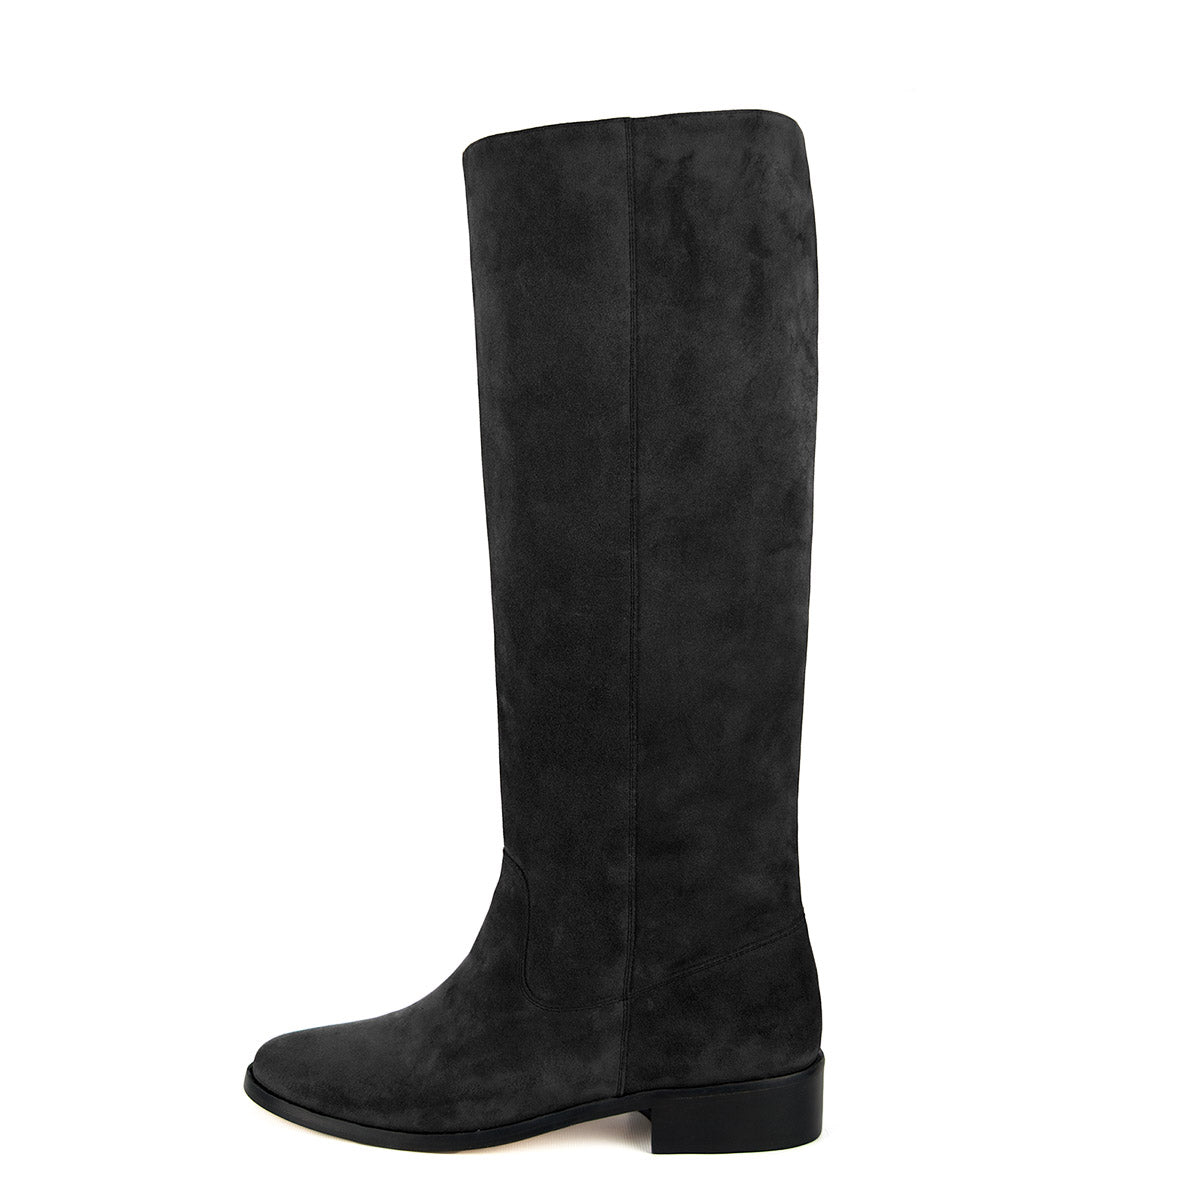 narrow calf black suede boots